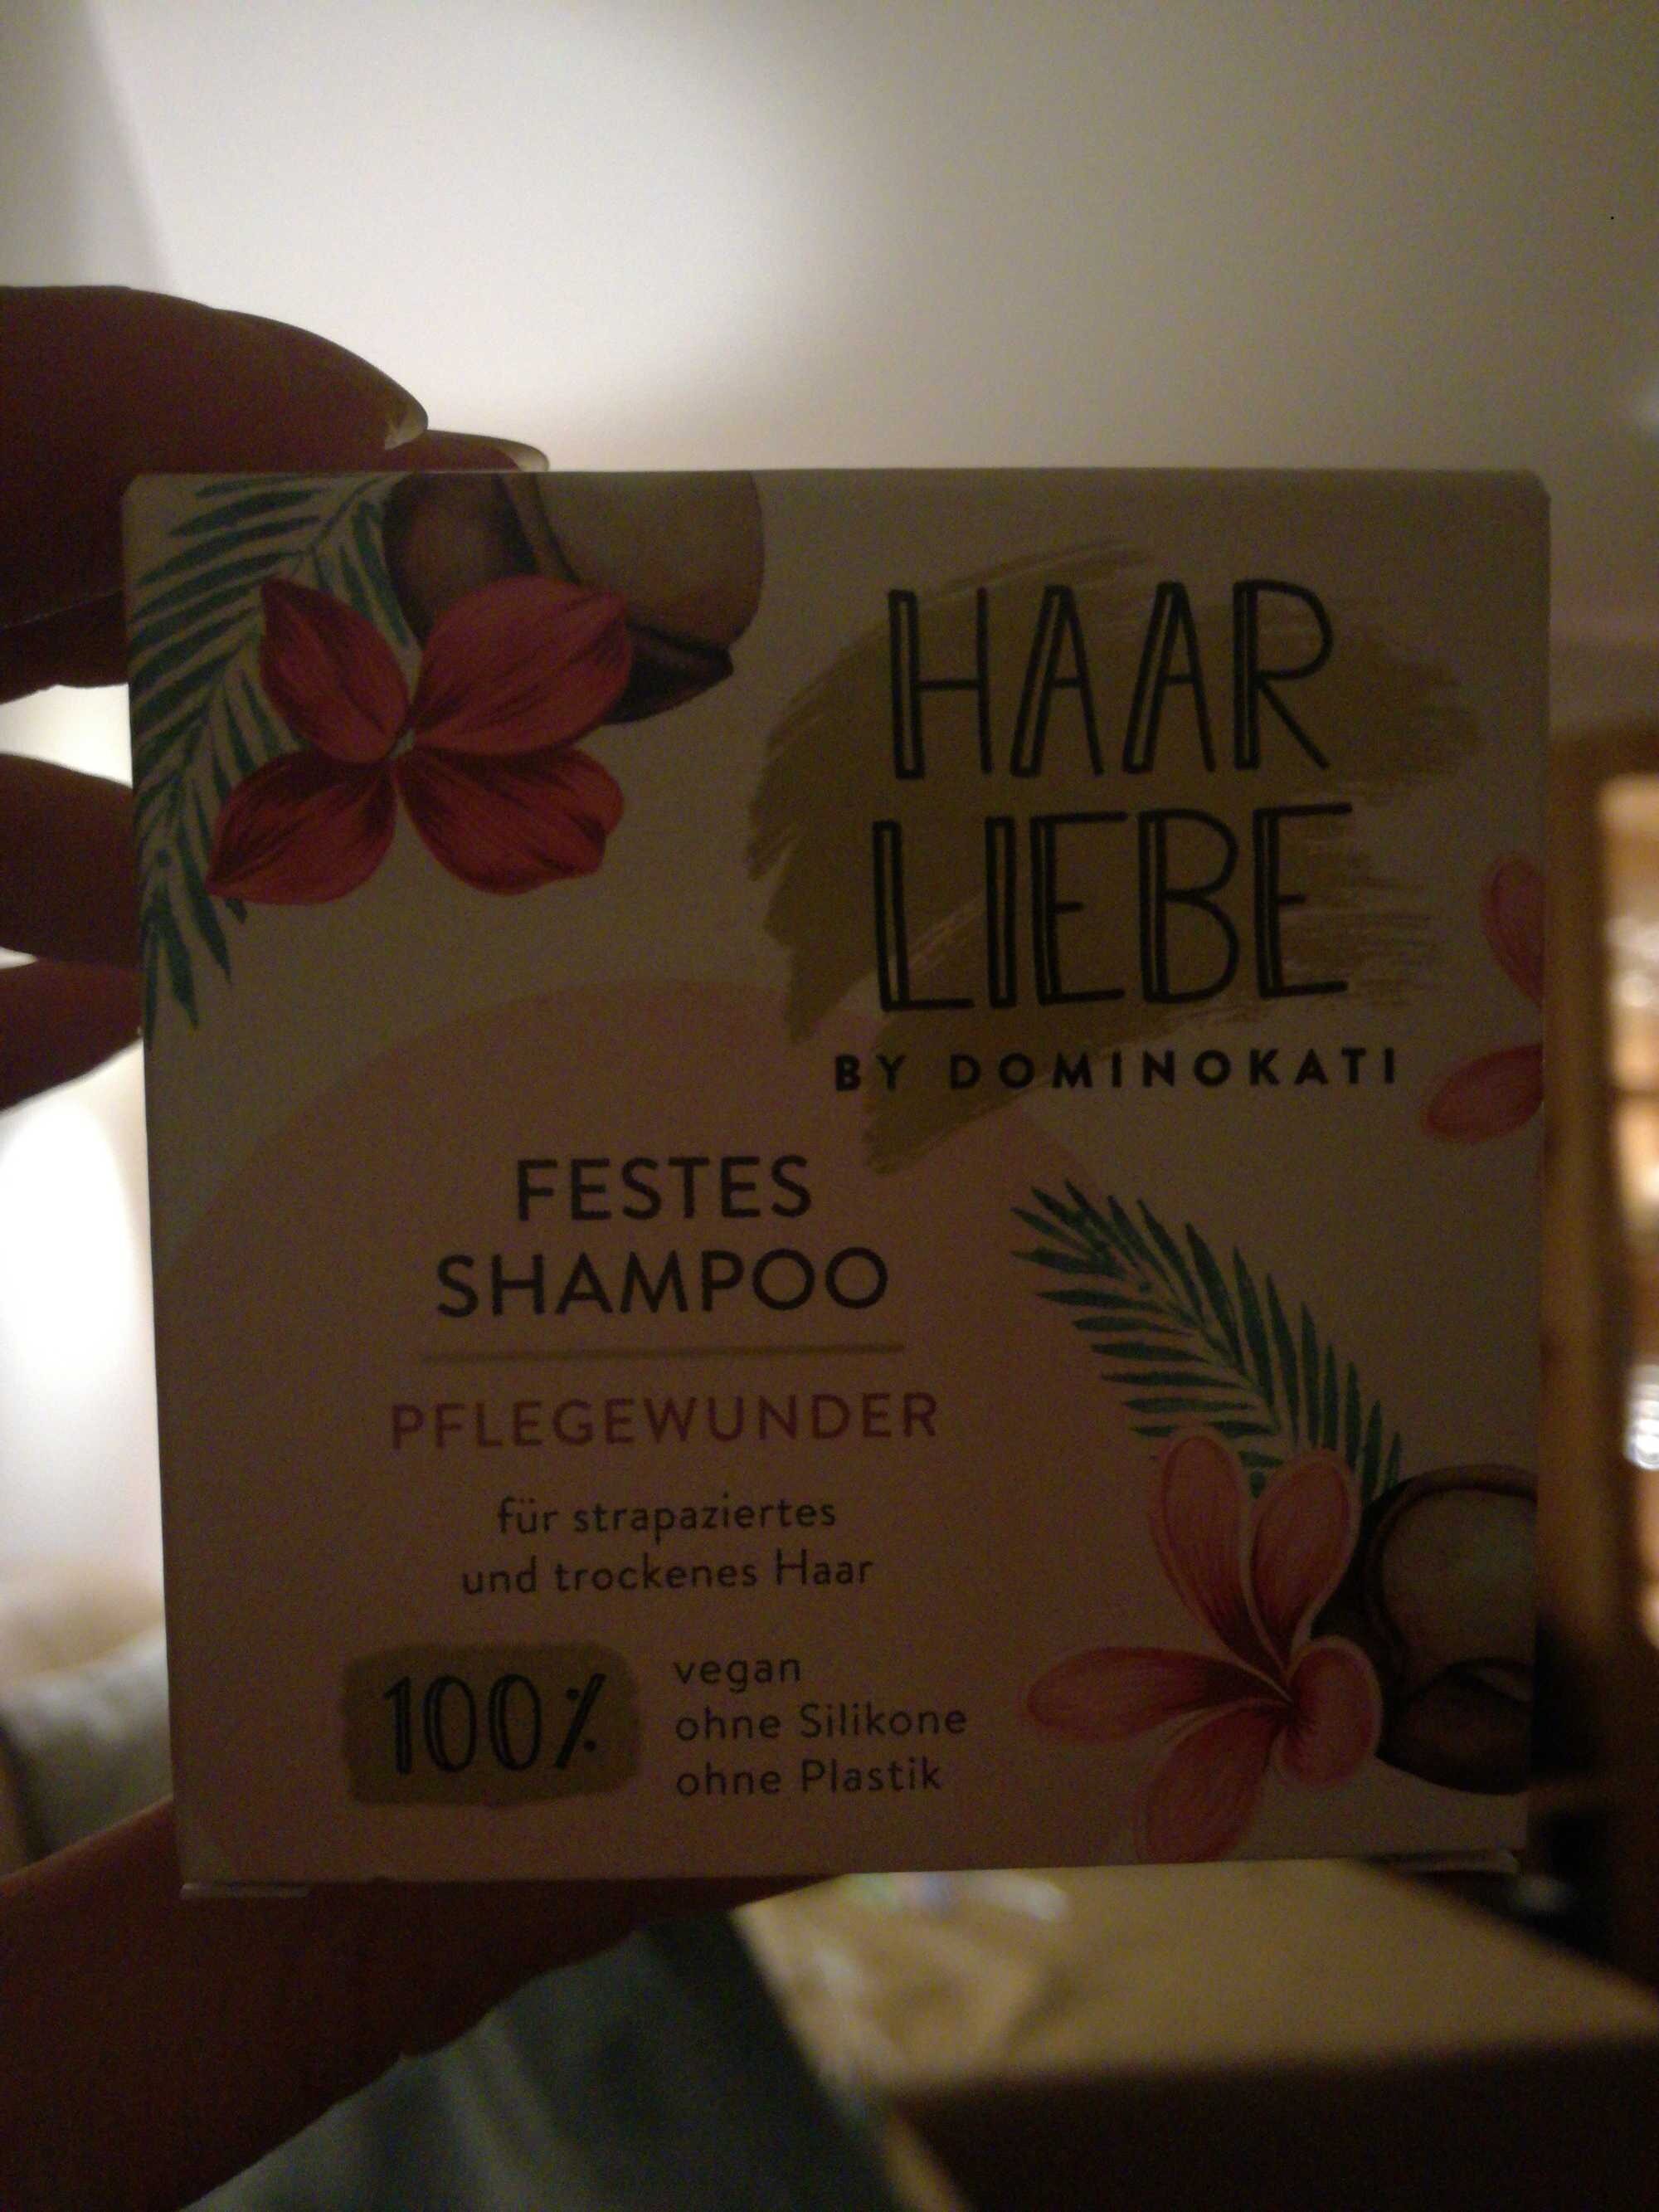 Festes Shampoo Pflegewunder - Product - de